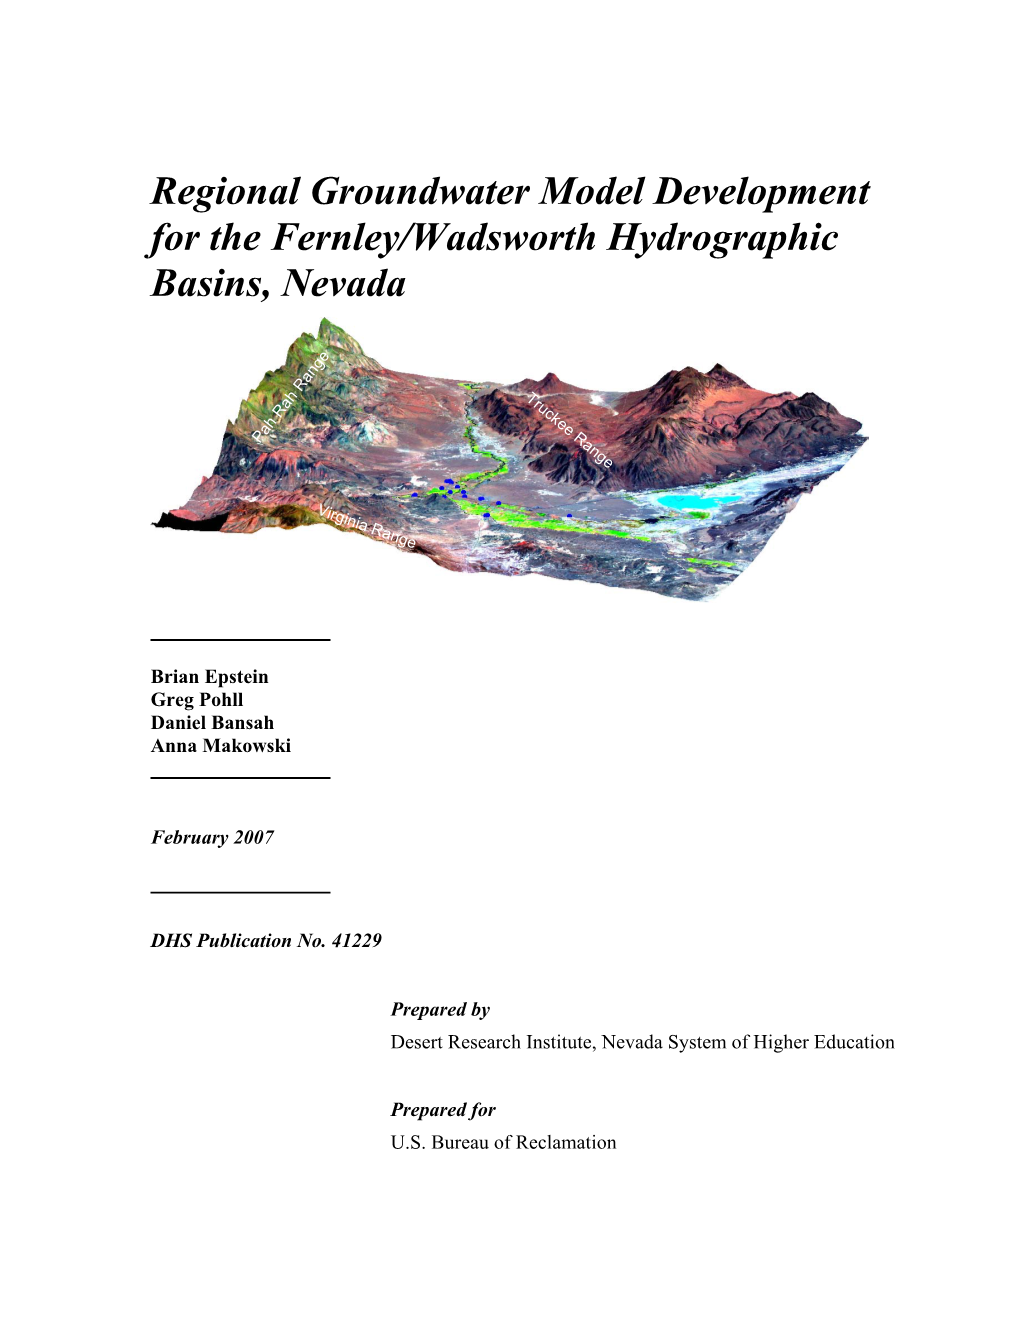 Regional Groundwater Model Development for the Fernley/Wadsworth Hydrographic Basins, Nevada